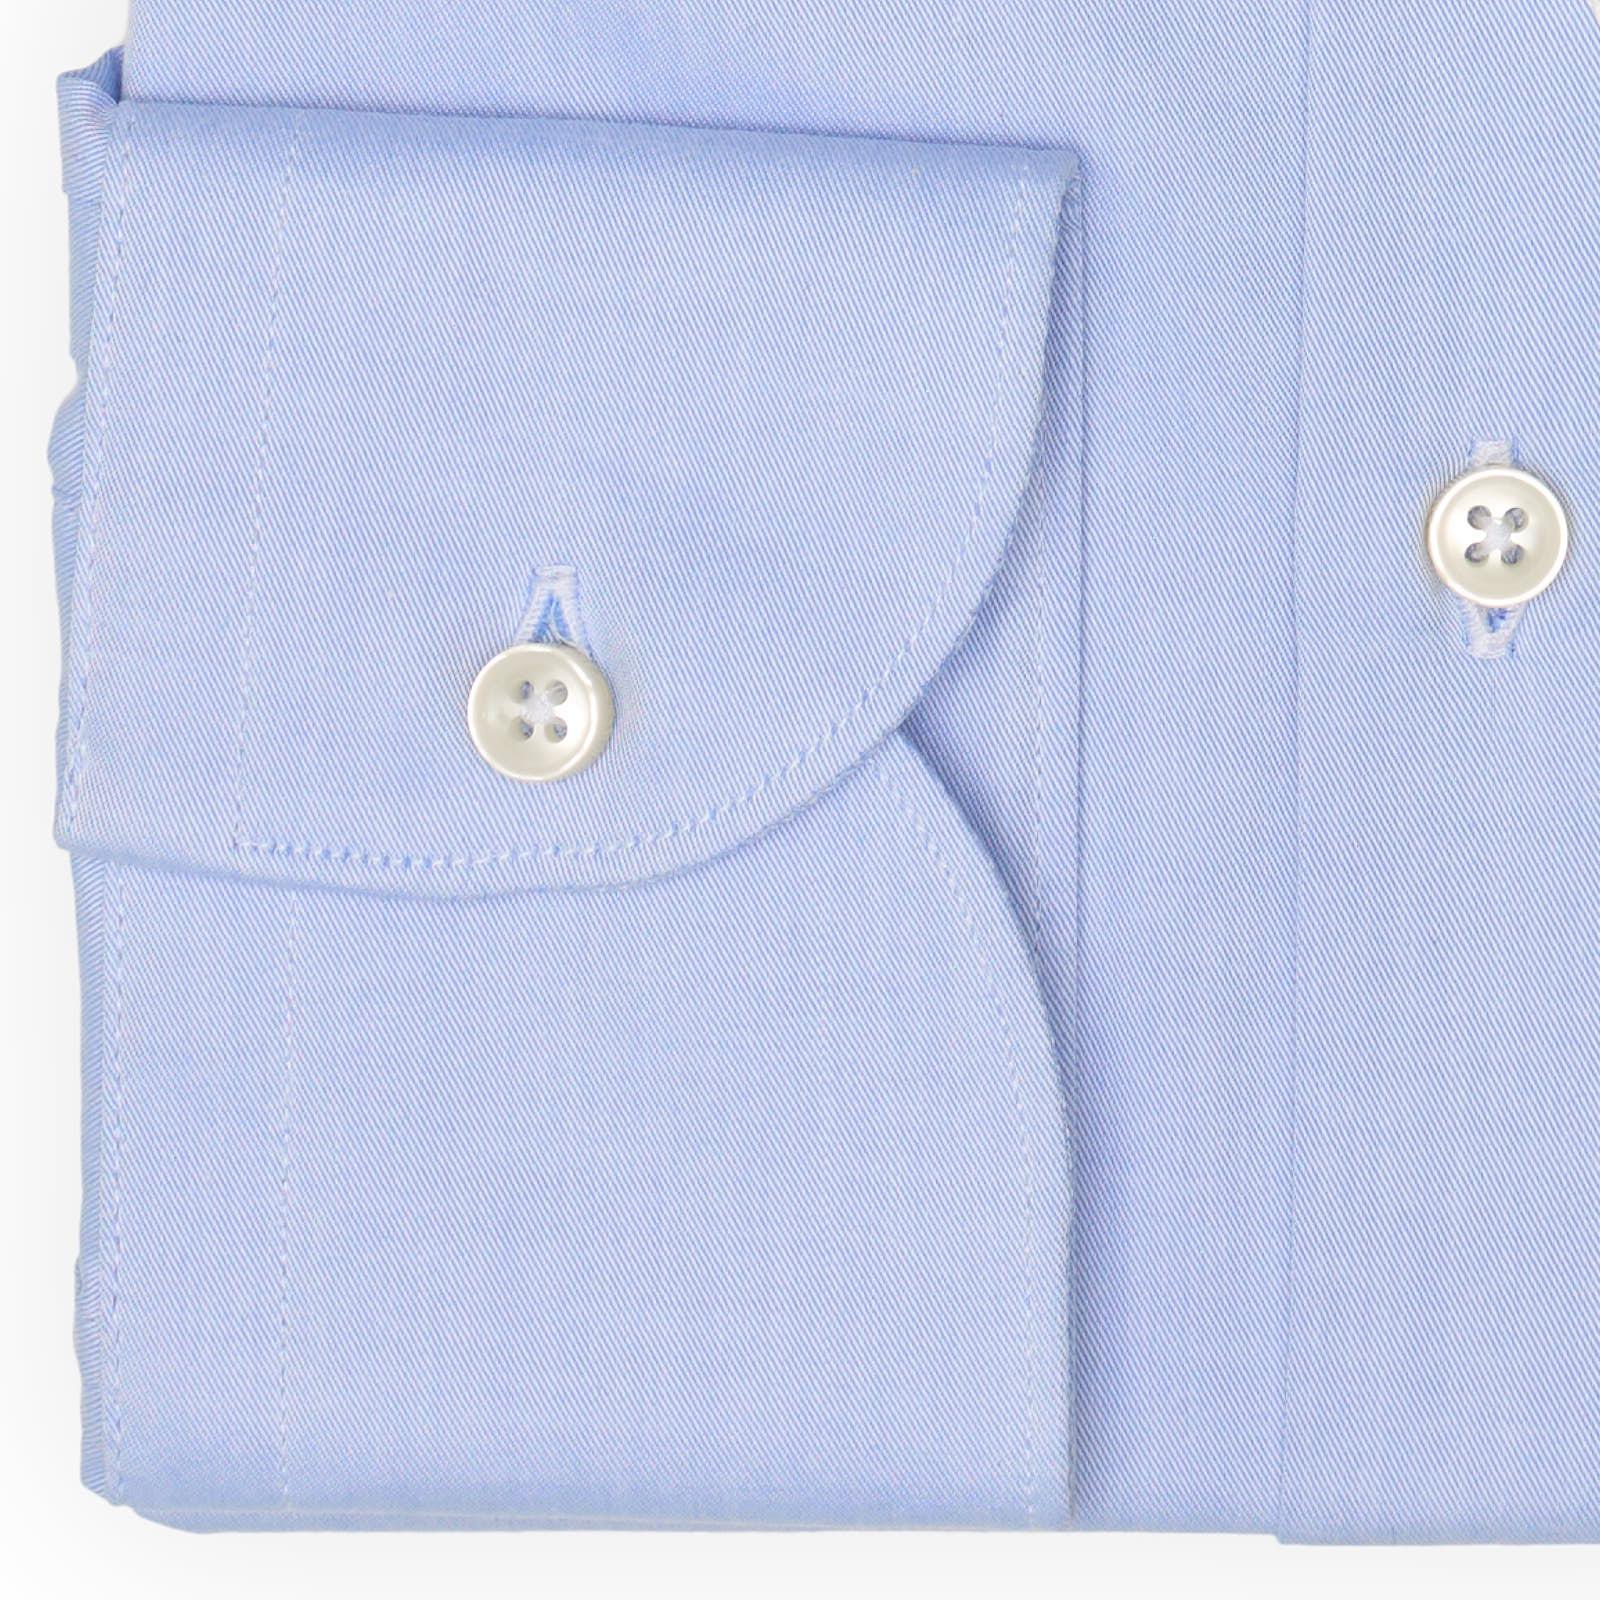 SARTORIA CAMPO Napoli Blue Twill Cotton Dress Shirt EU 38 NEW US 15